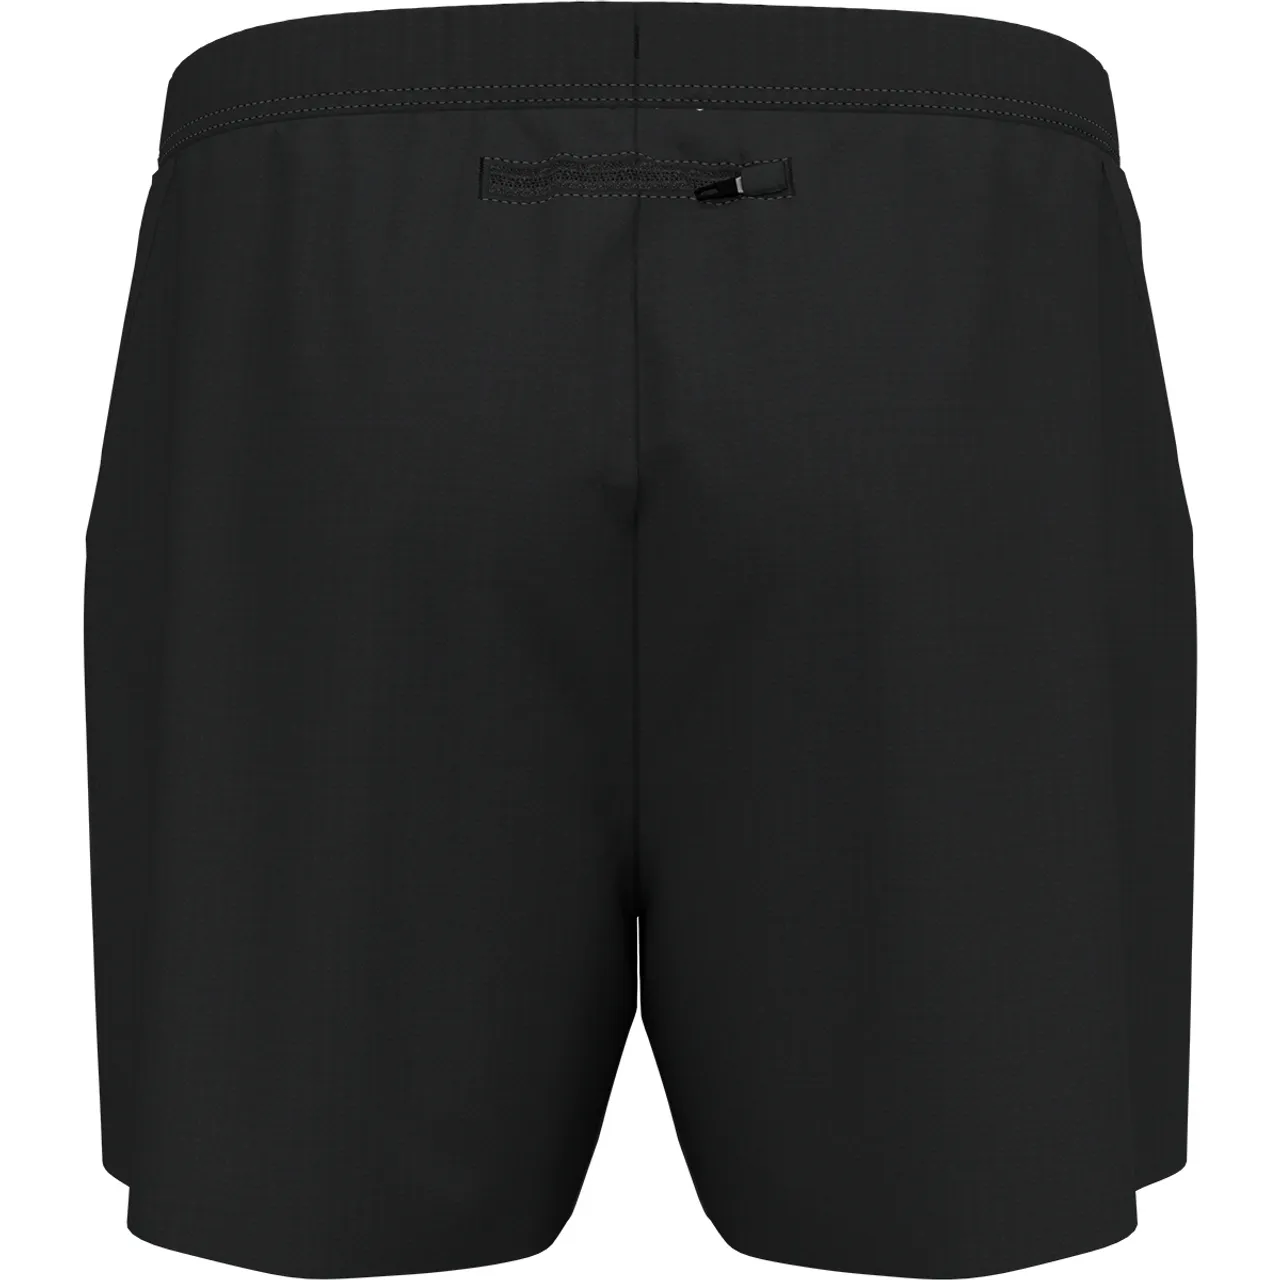 Odlo Herren Zeroweight 5 Inch Shorts